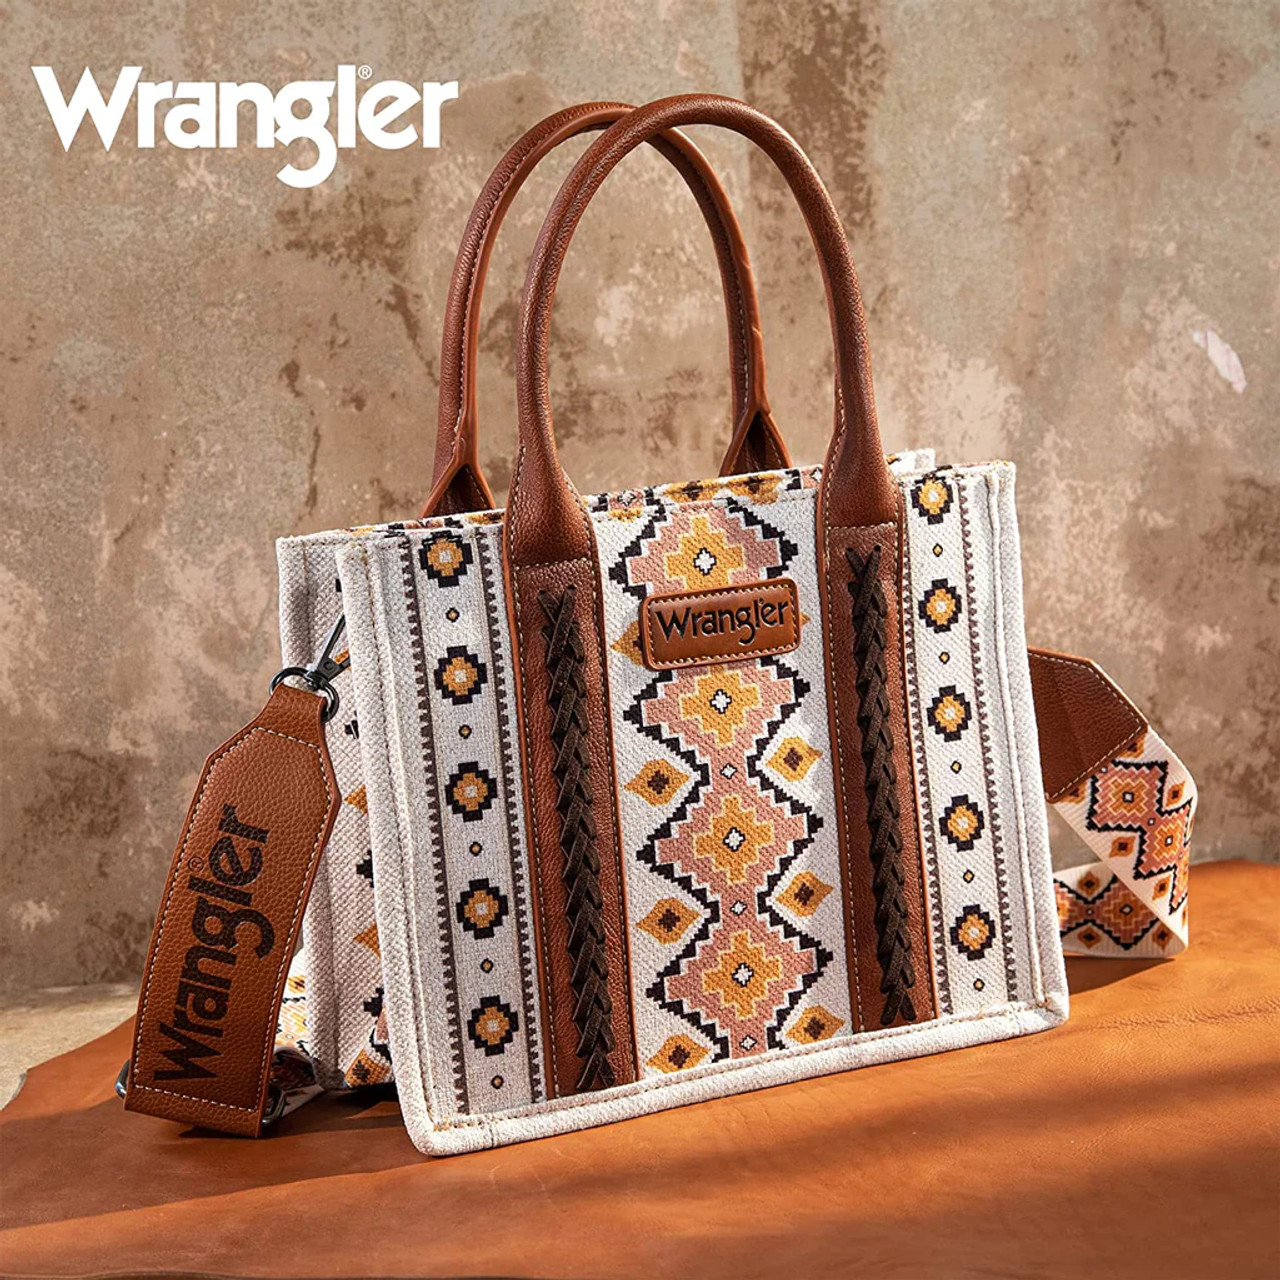 Ladies Mini Handbag Shoulder Chain Bag - Black/white | Konga Online Shopping